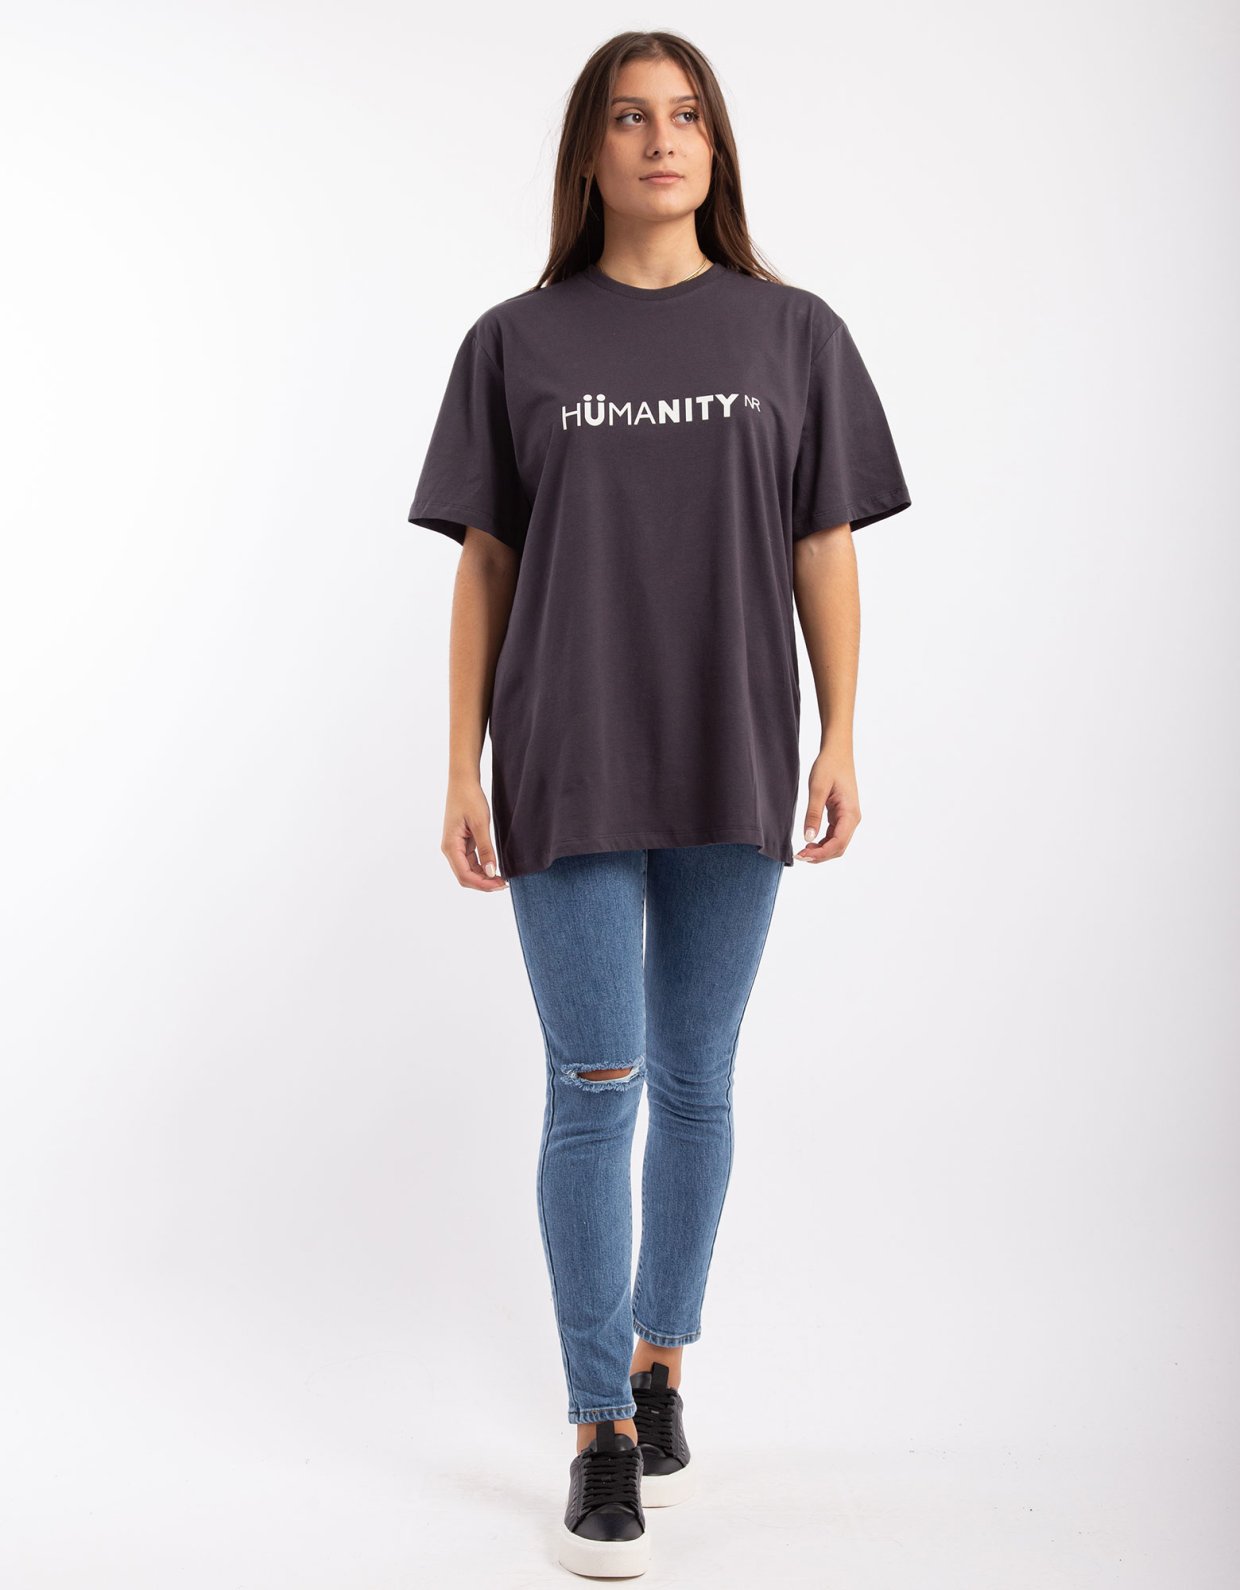 Nadia Rapti Humanity t-shirt black